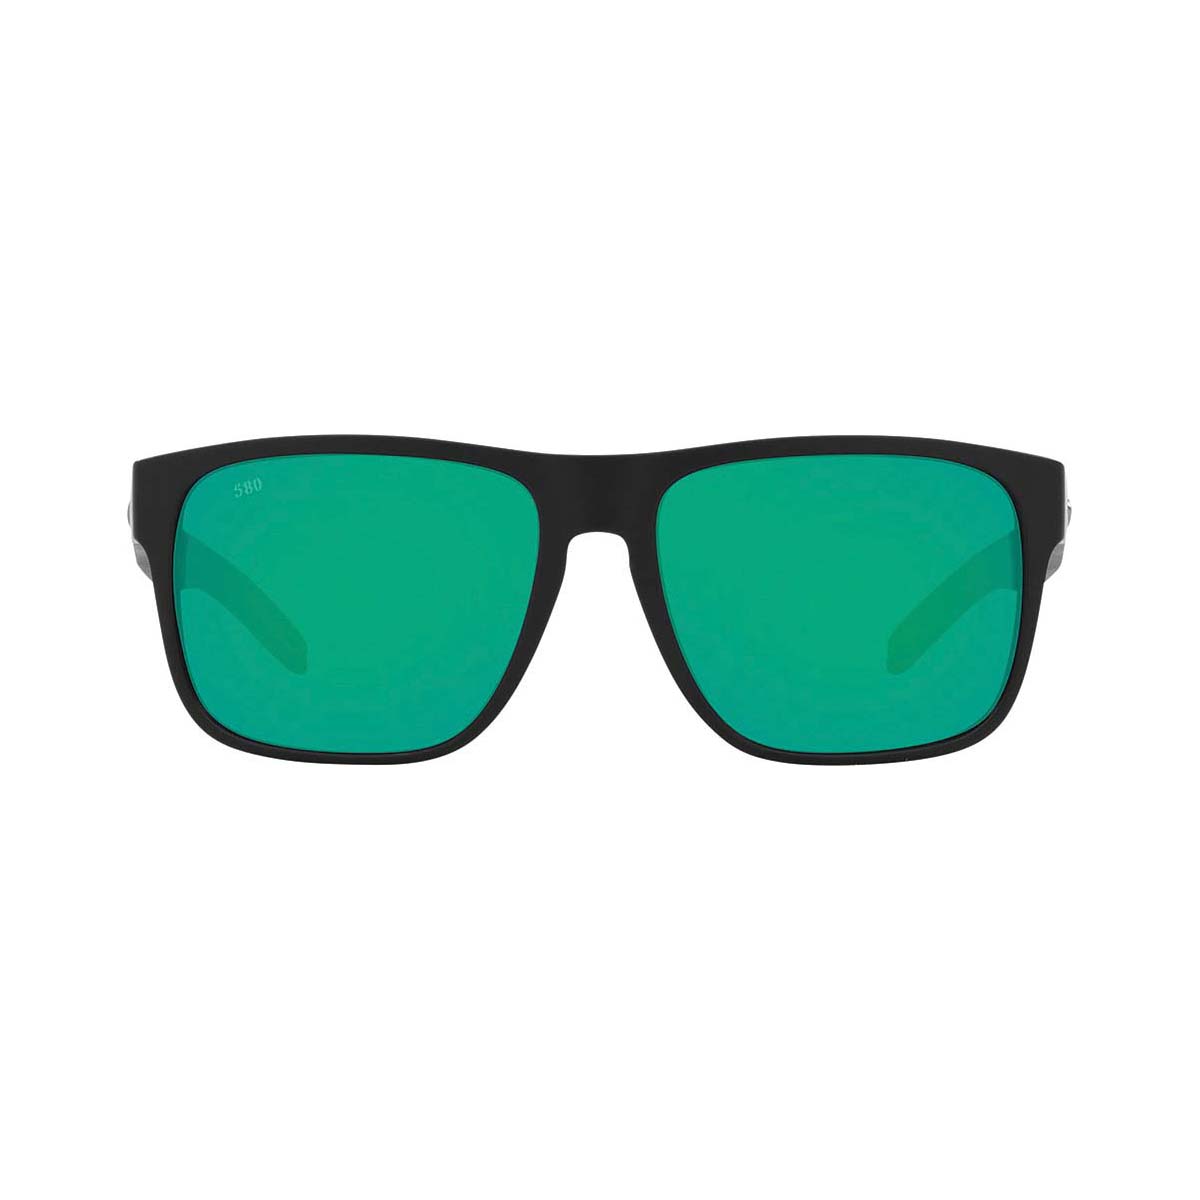 Costa Spearo XL Men's Sunglasses Black with Green Lens